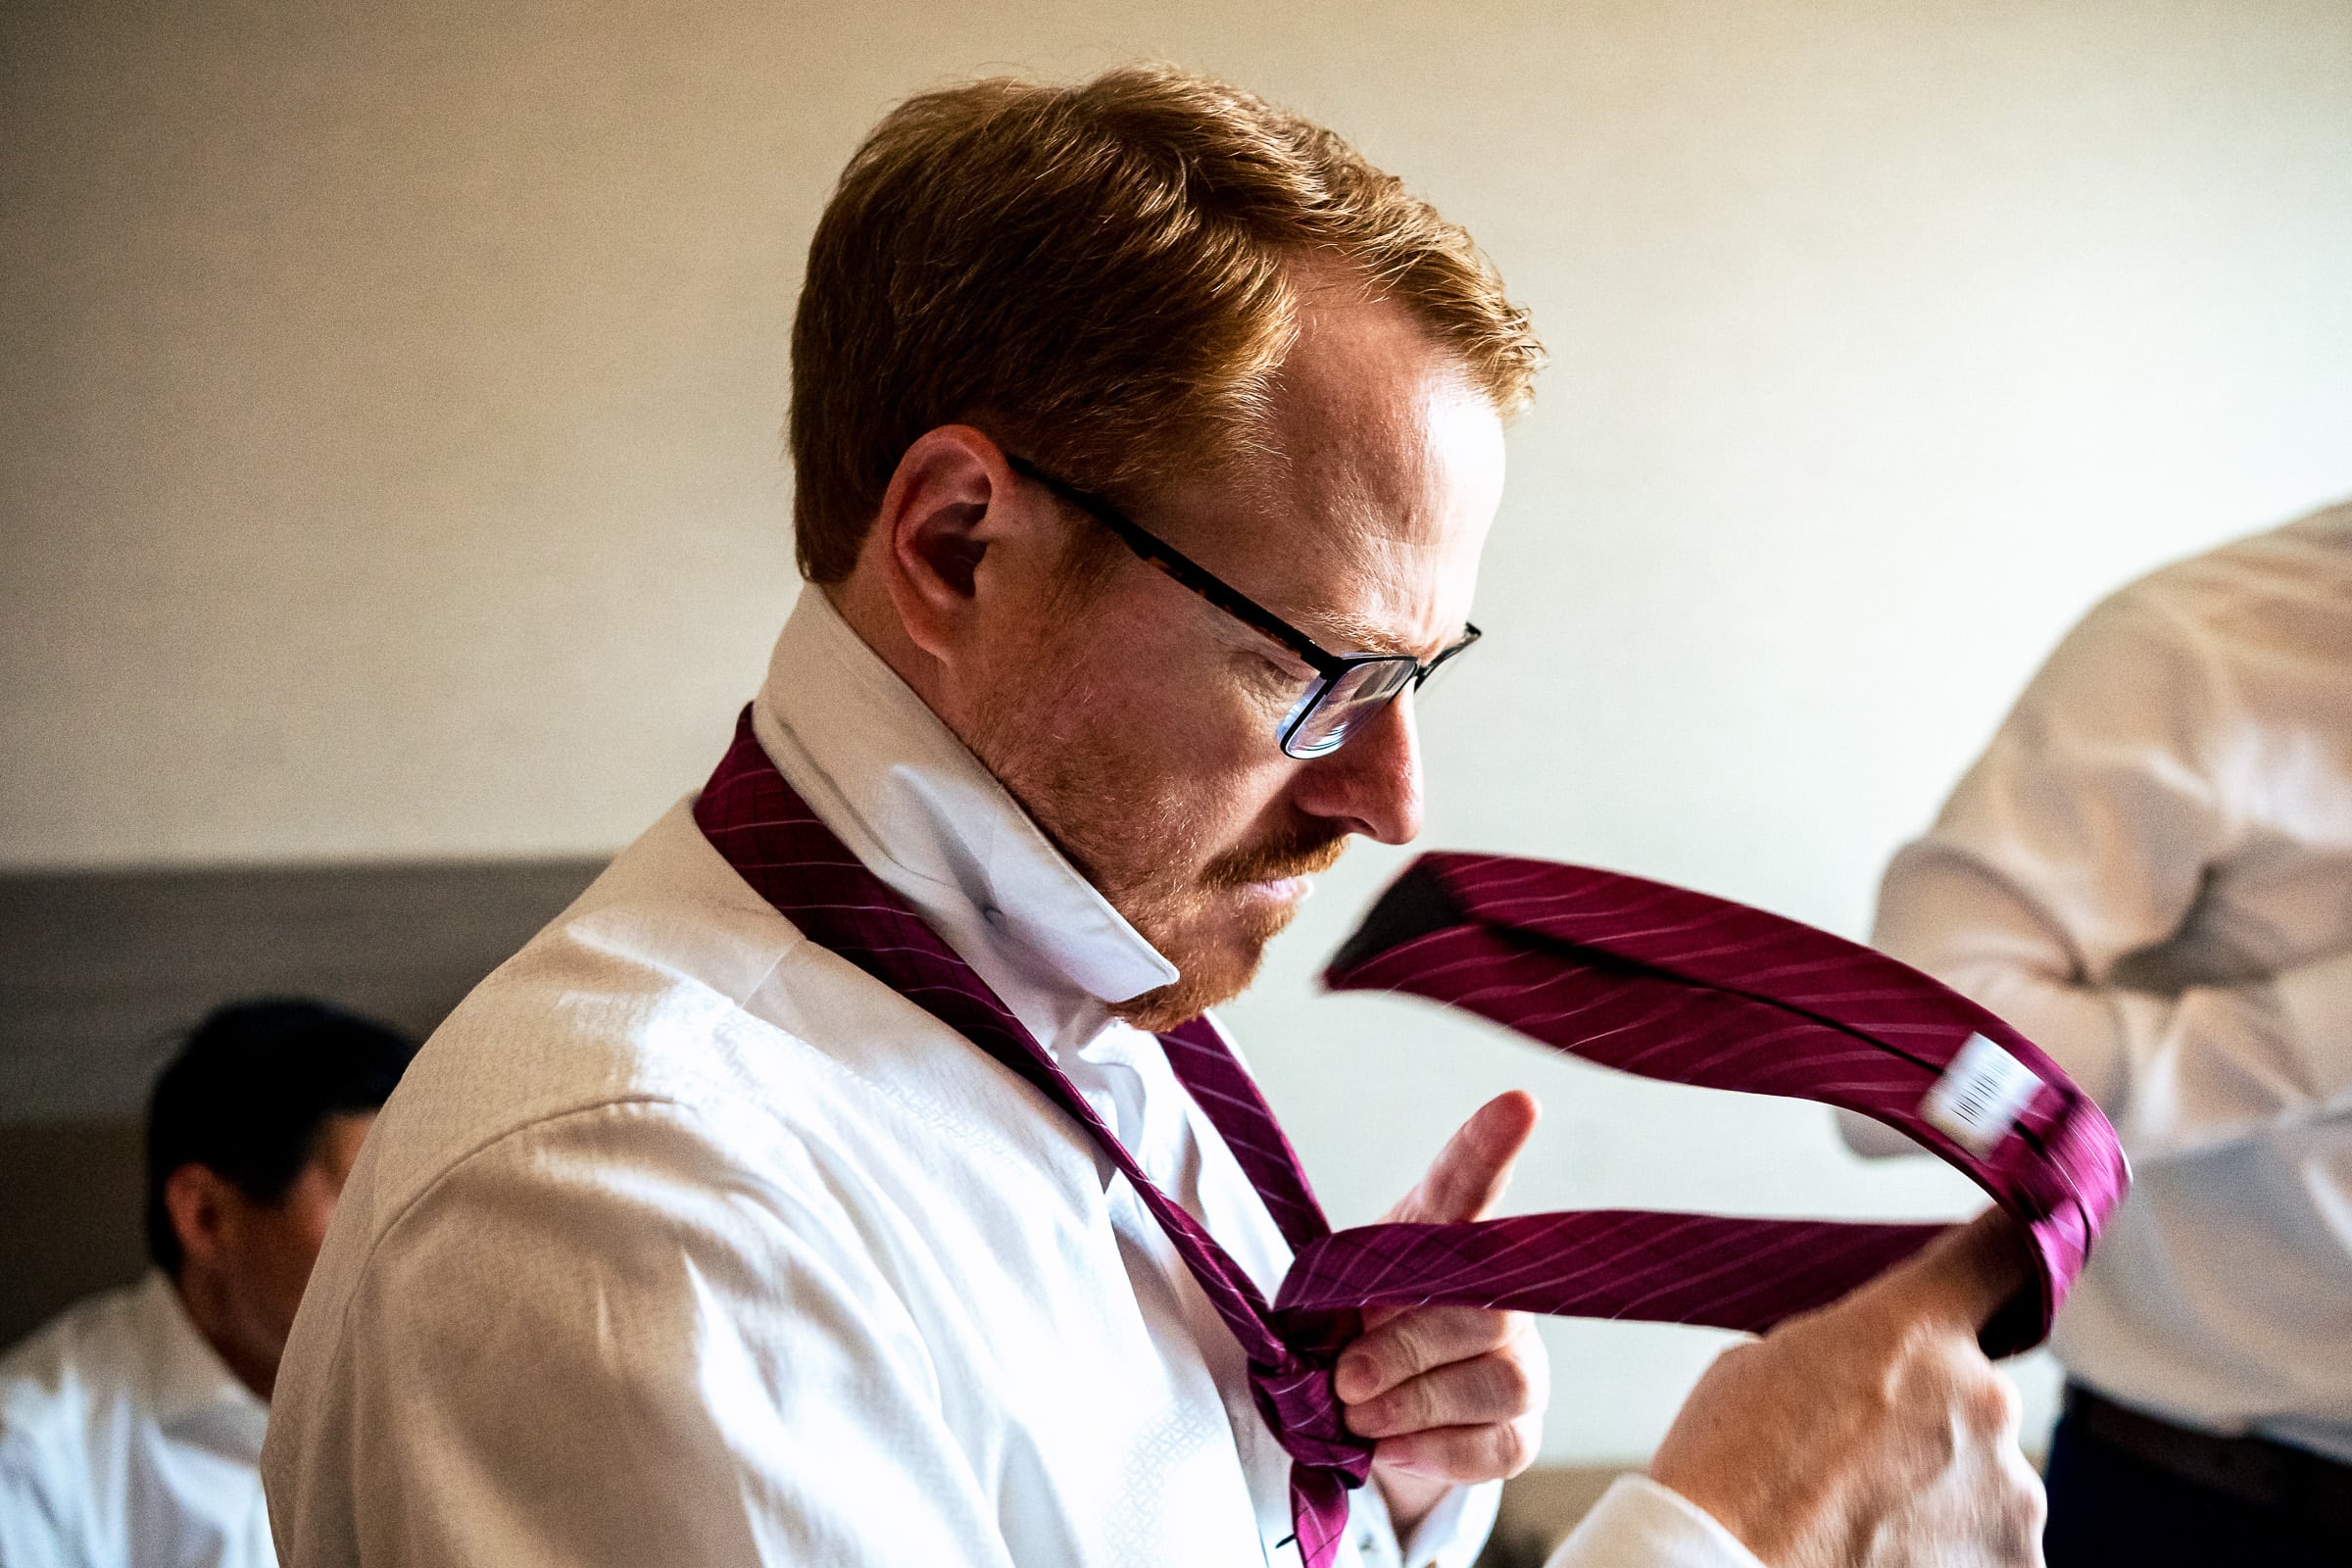 groom ties his tie on his wedding day | photos by Kivus & Camera